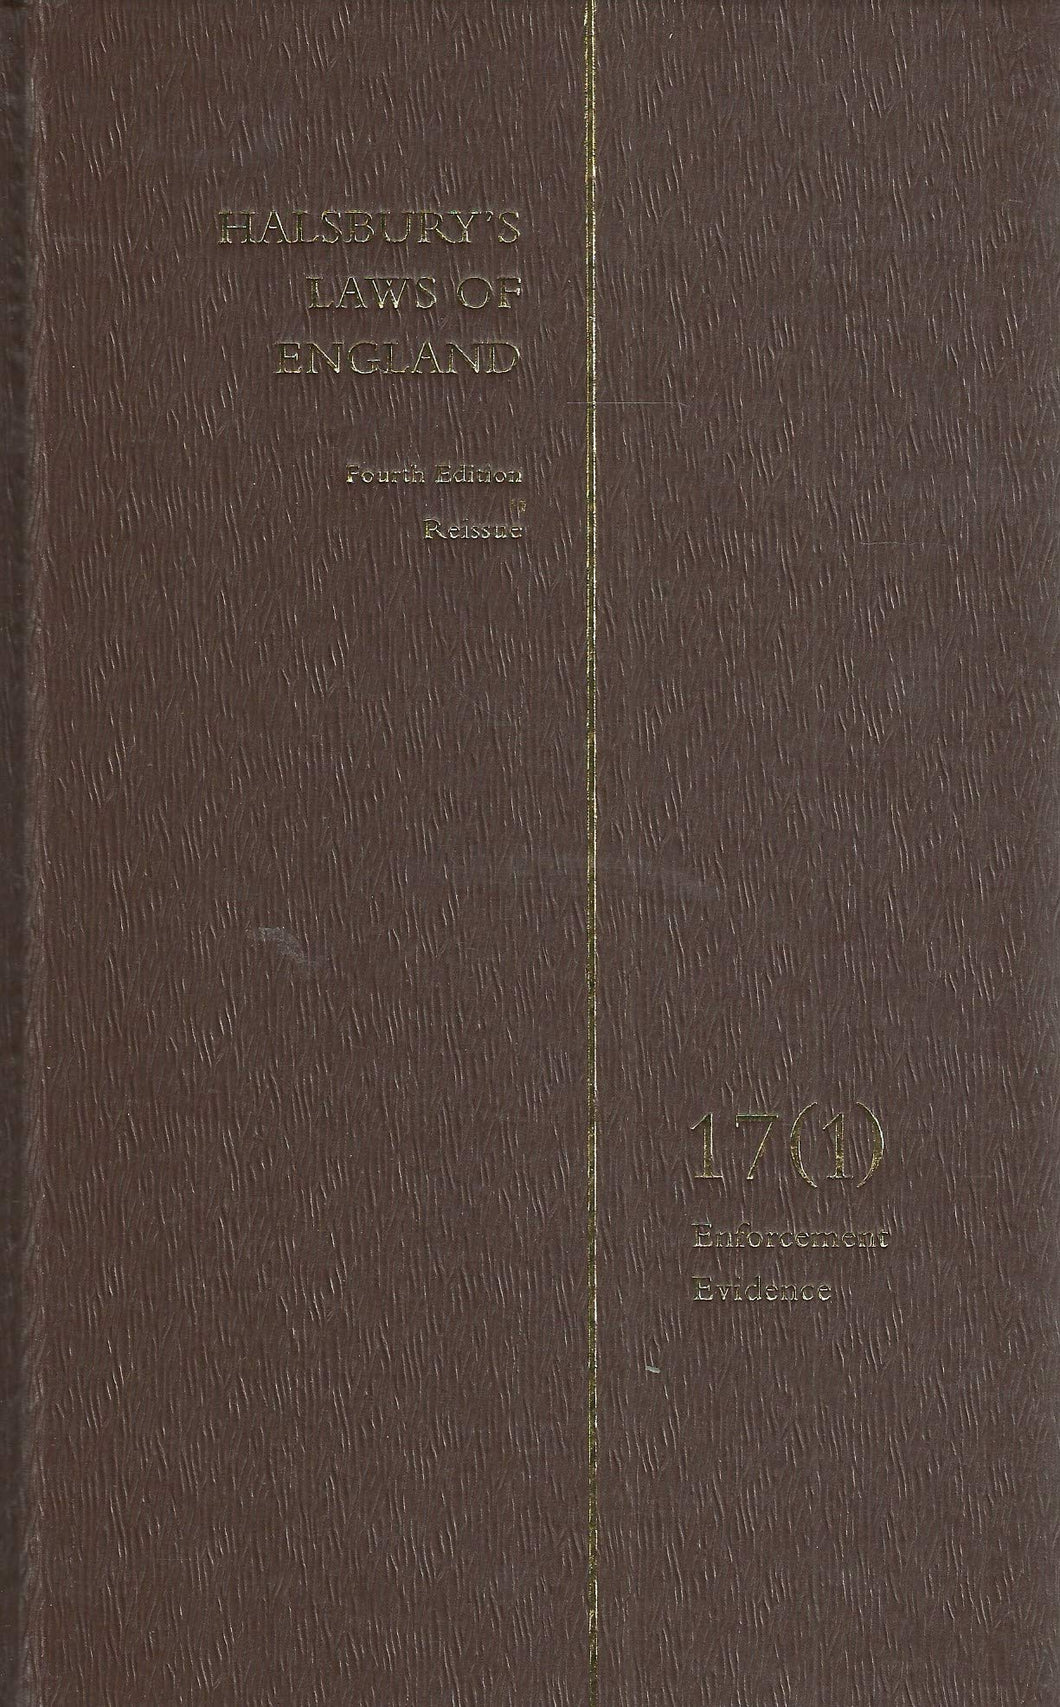 Halsbury's Laws of England Volume 17(1) (Halsbury's Laws of England)